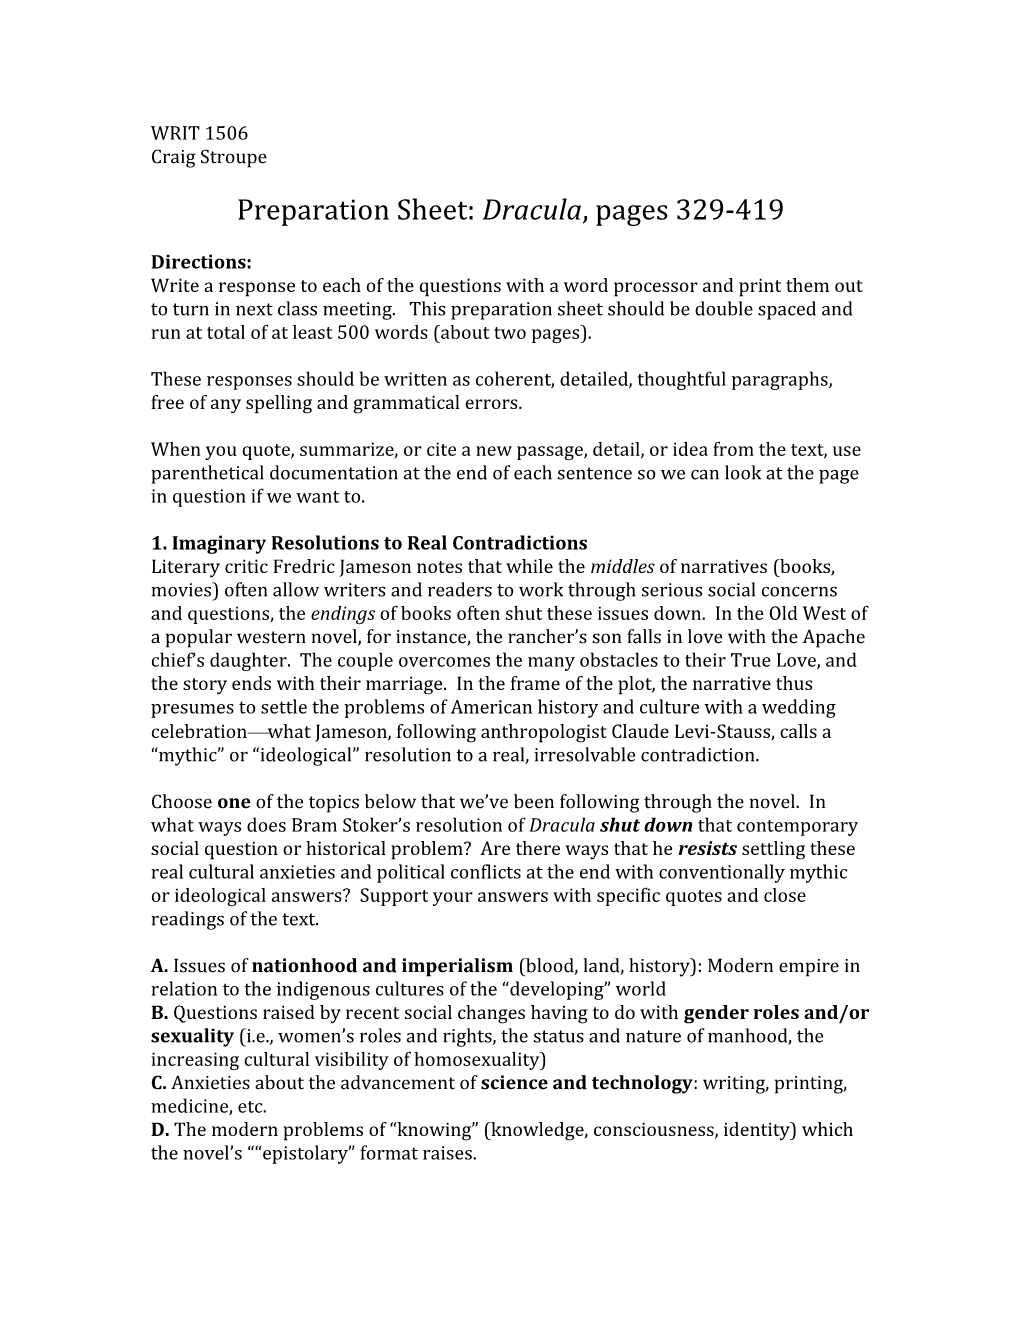 Preparation Sheet: Dracula, Pages 329-419